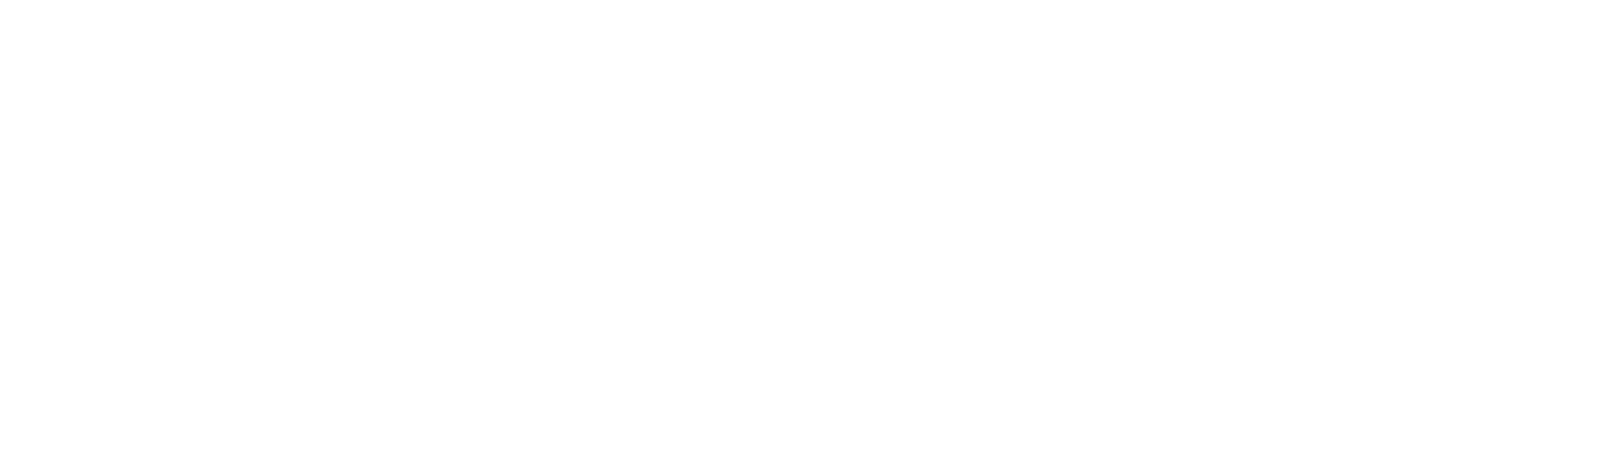 Kansas Legislative Division of Post Audit